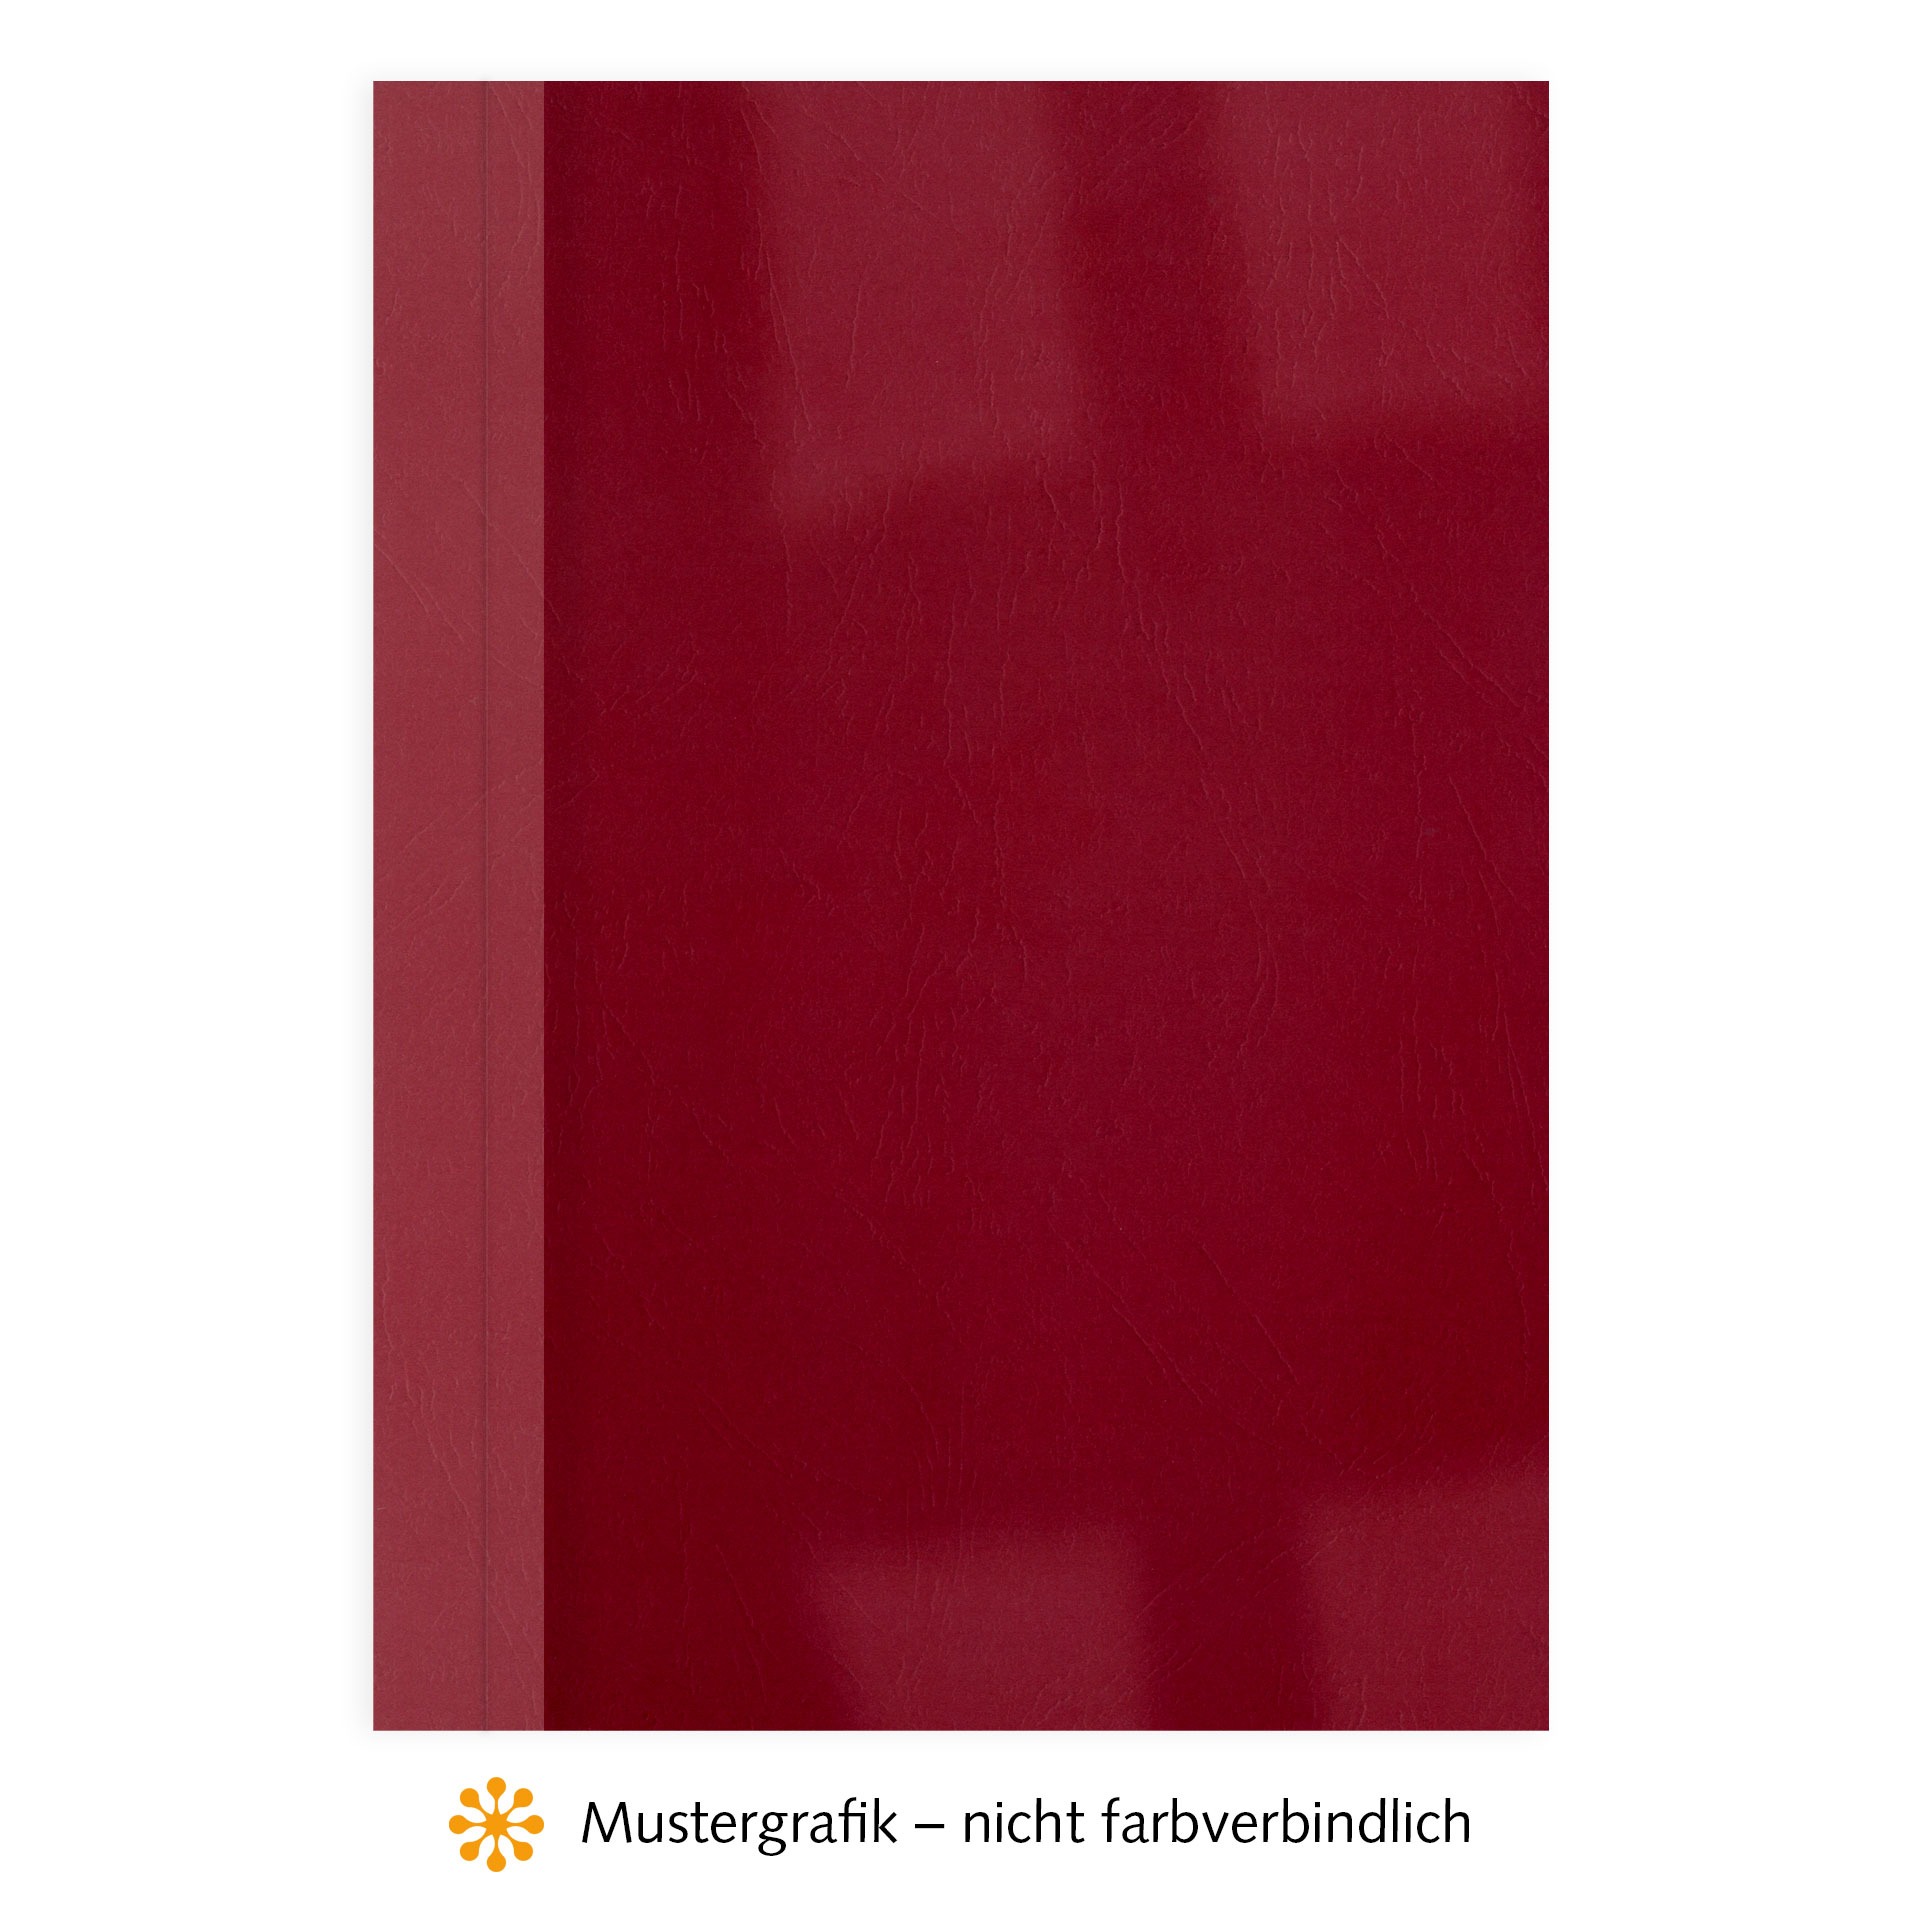 Ösenmappen DUO Cover, Vorderseite Folie KLAR transparent, Rückseite Karton Leder, Rot, 6 mm, 51 bis 60 Blatt